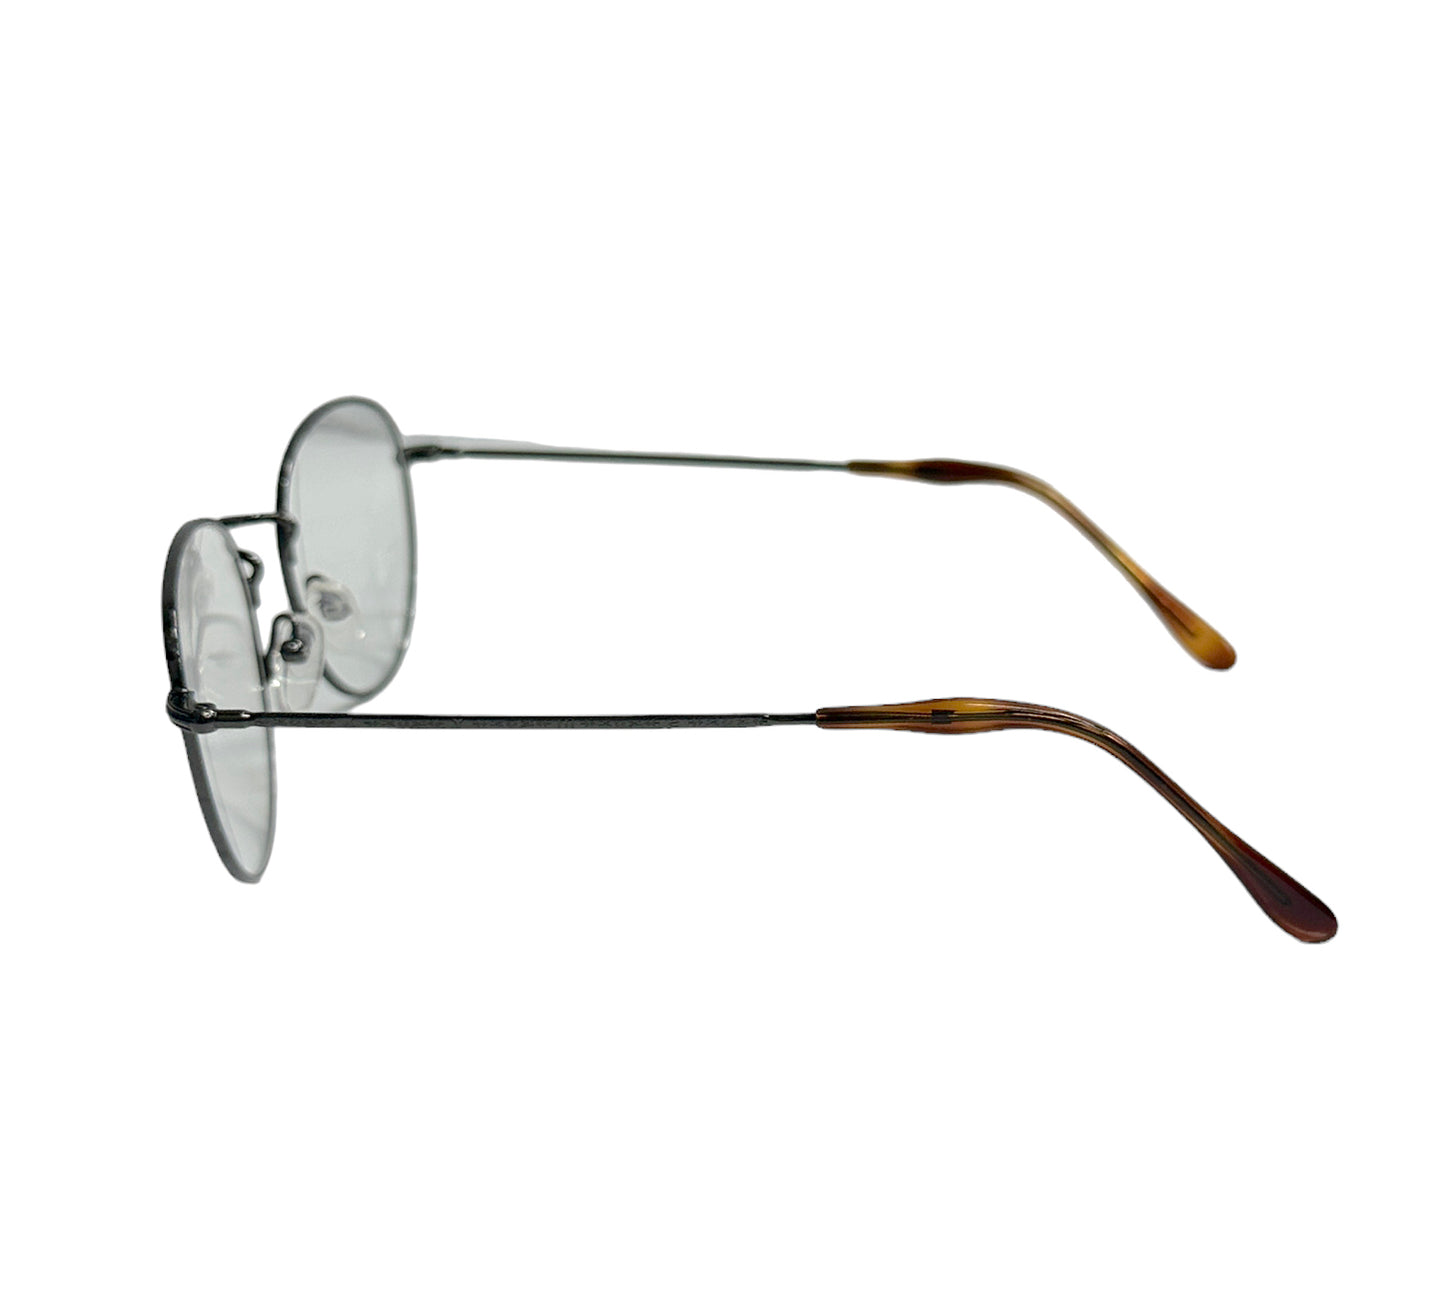 Kyme LUC350 00mm New Eyeglasses